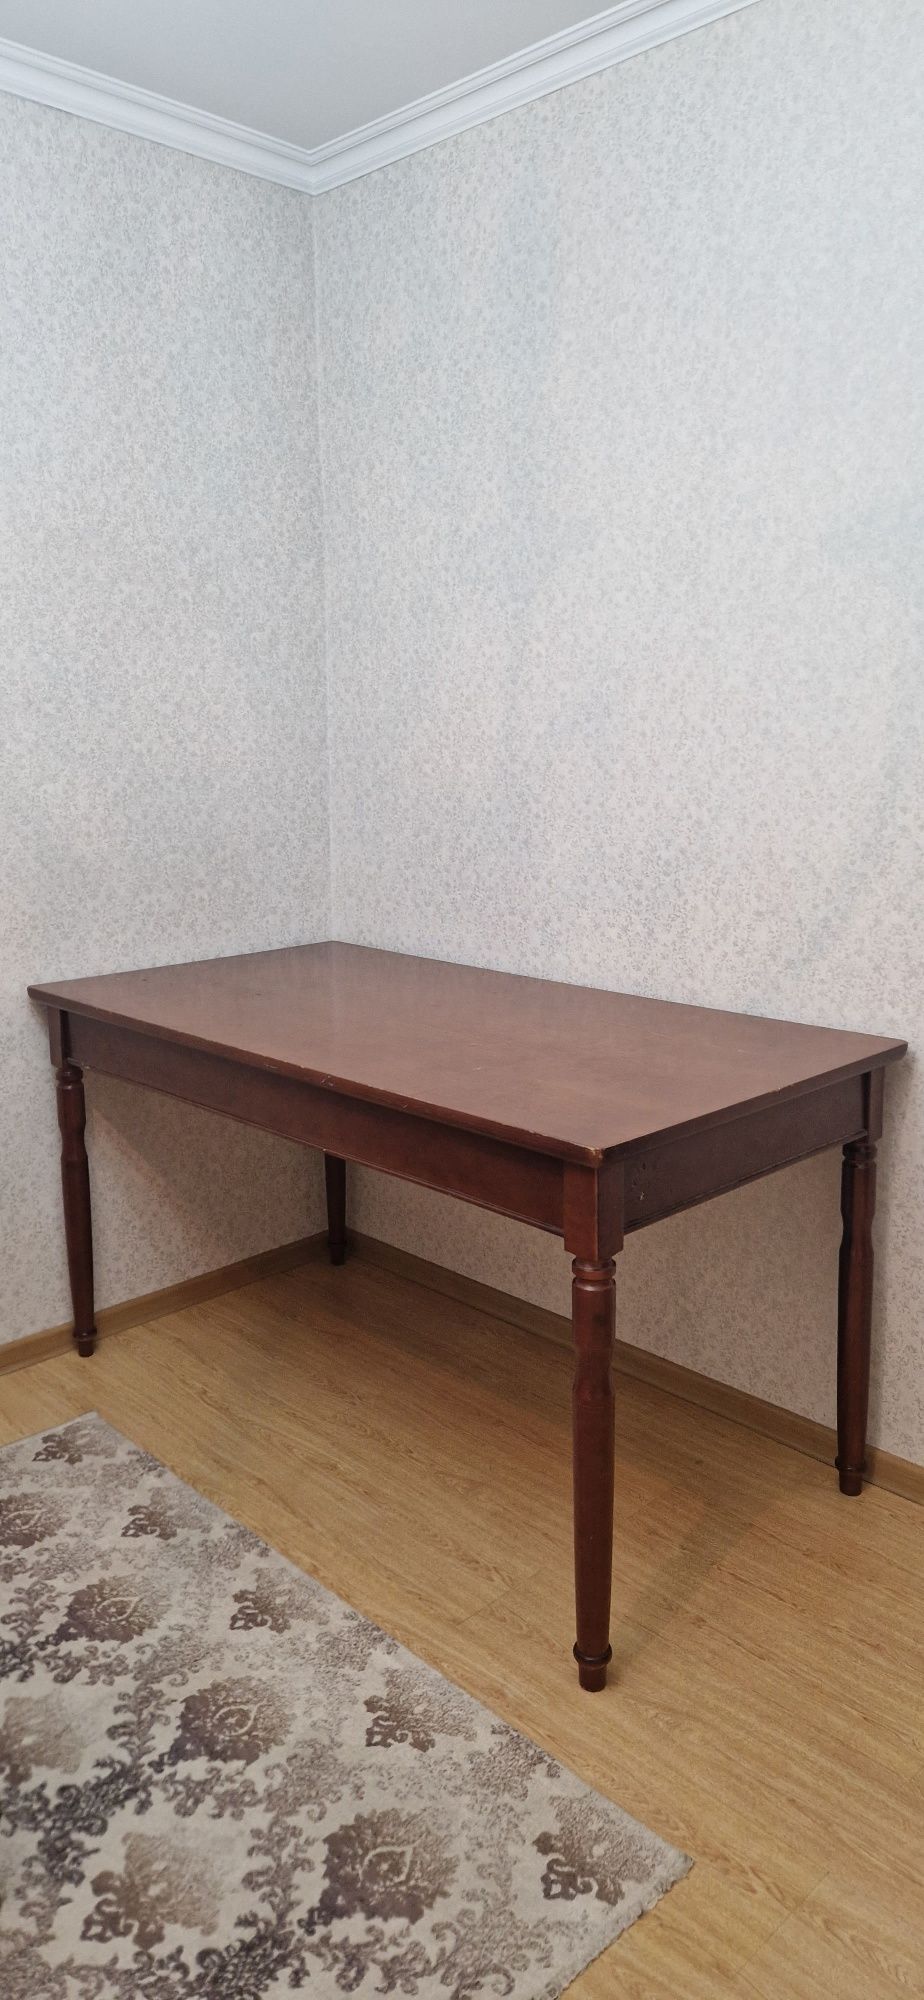 Деревянный стол для дома для дачи